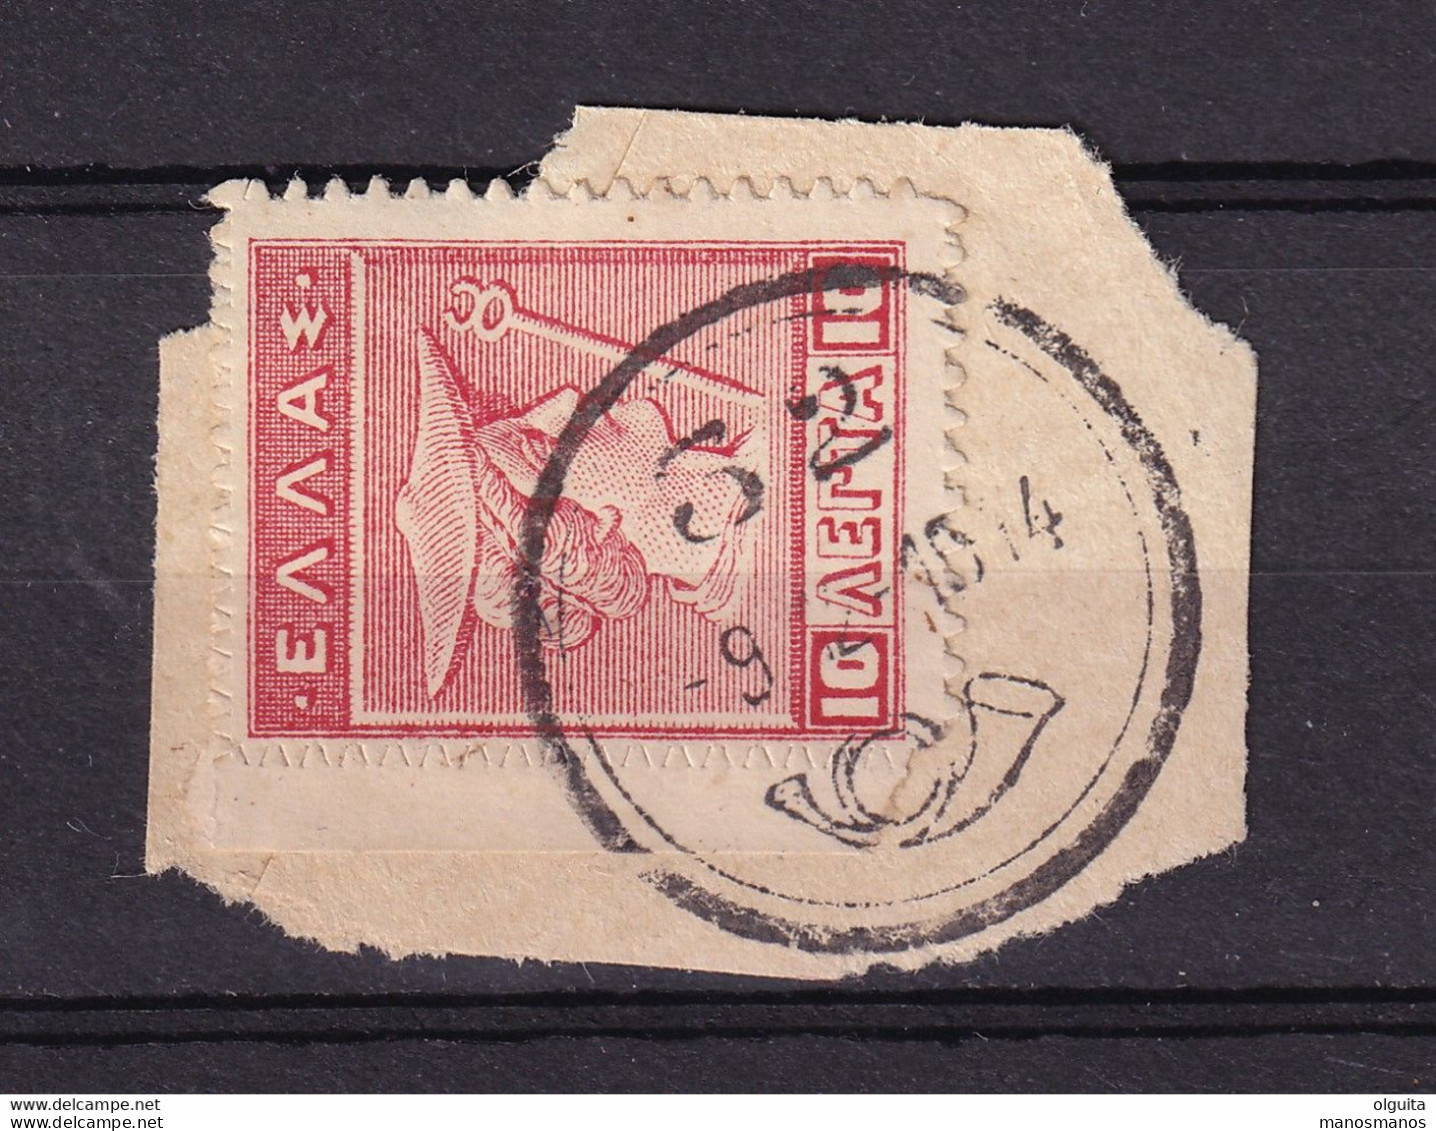 DCPEB 036 - CRETE RURAL Posthorn Cancels - Nr 32 (PANORMOS) On Greek Litho Stamp - Crete